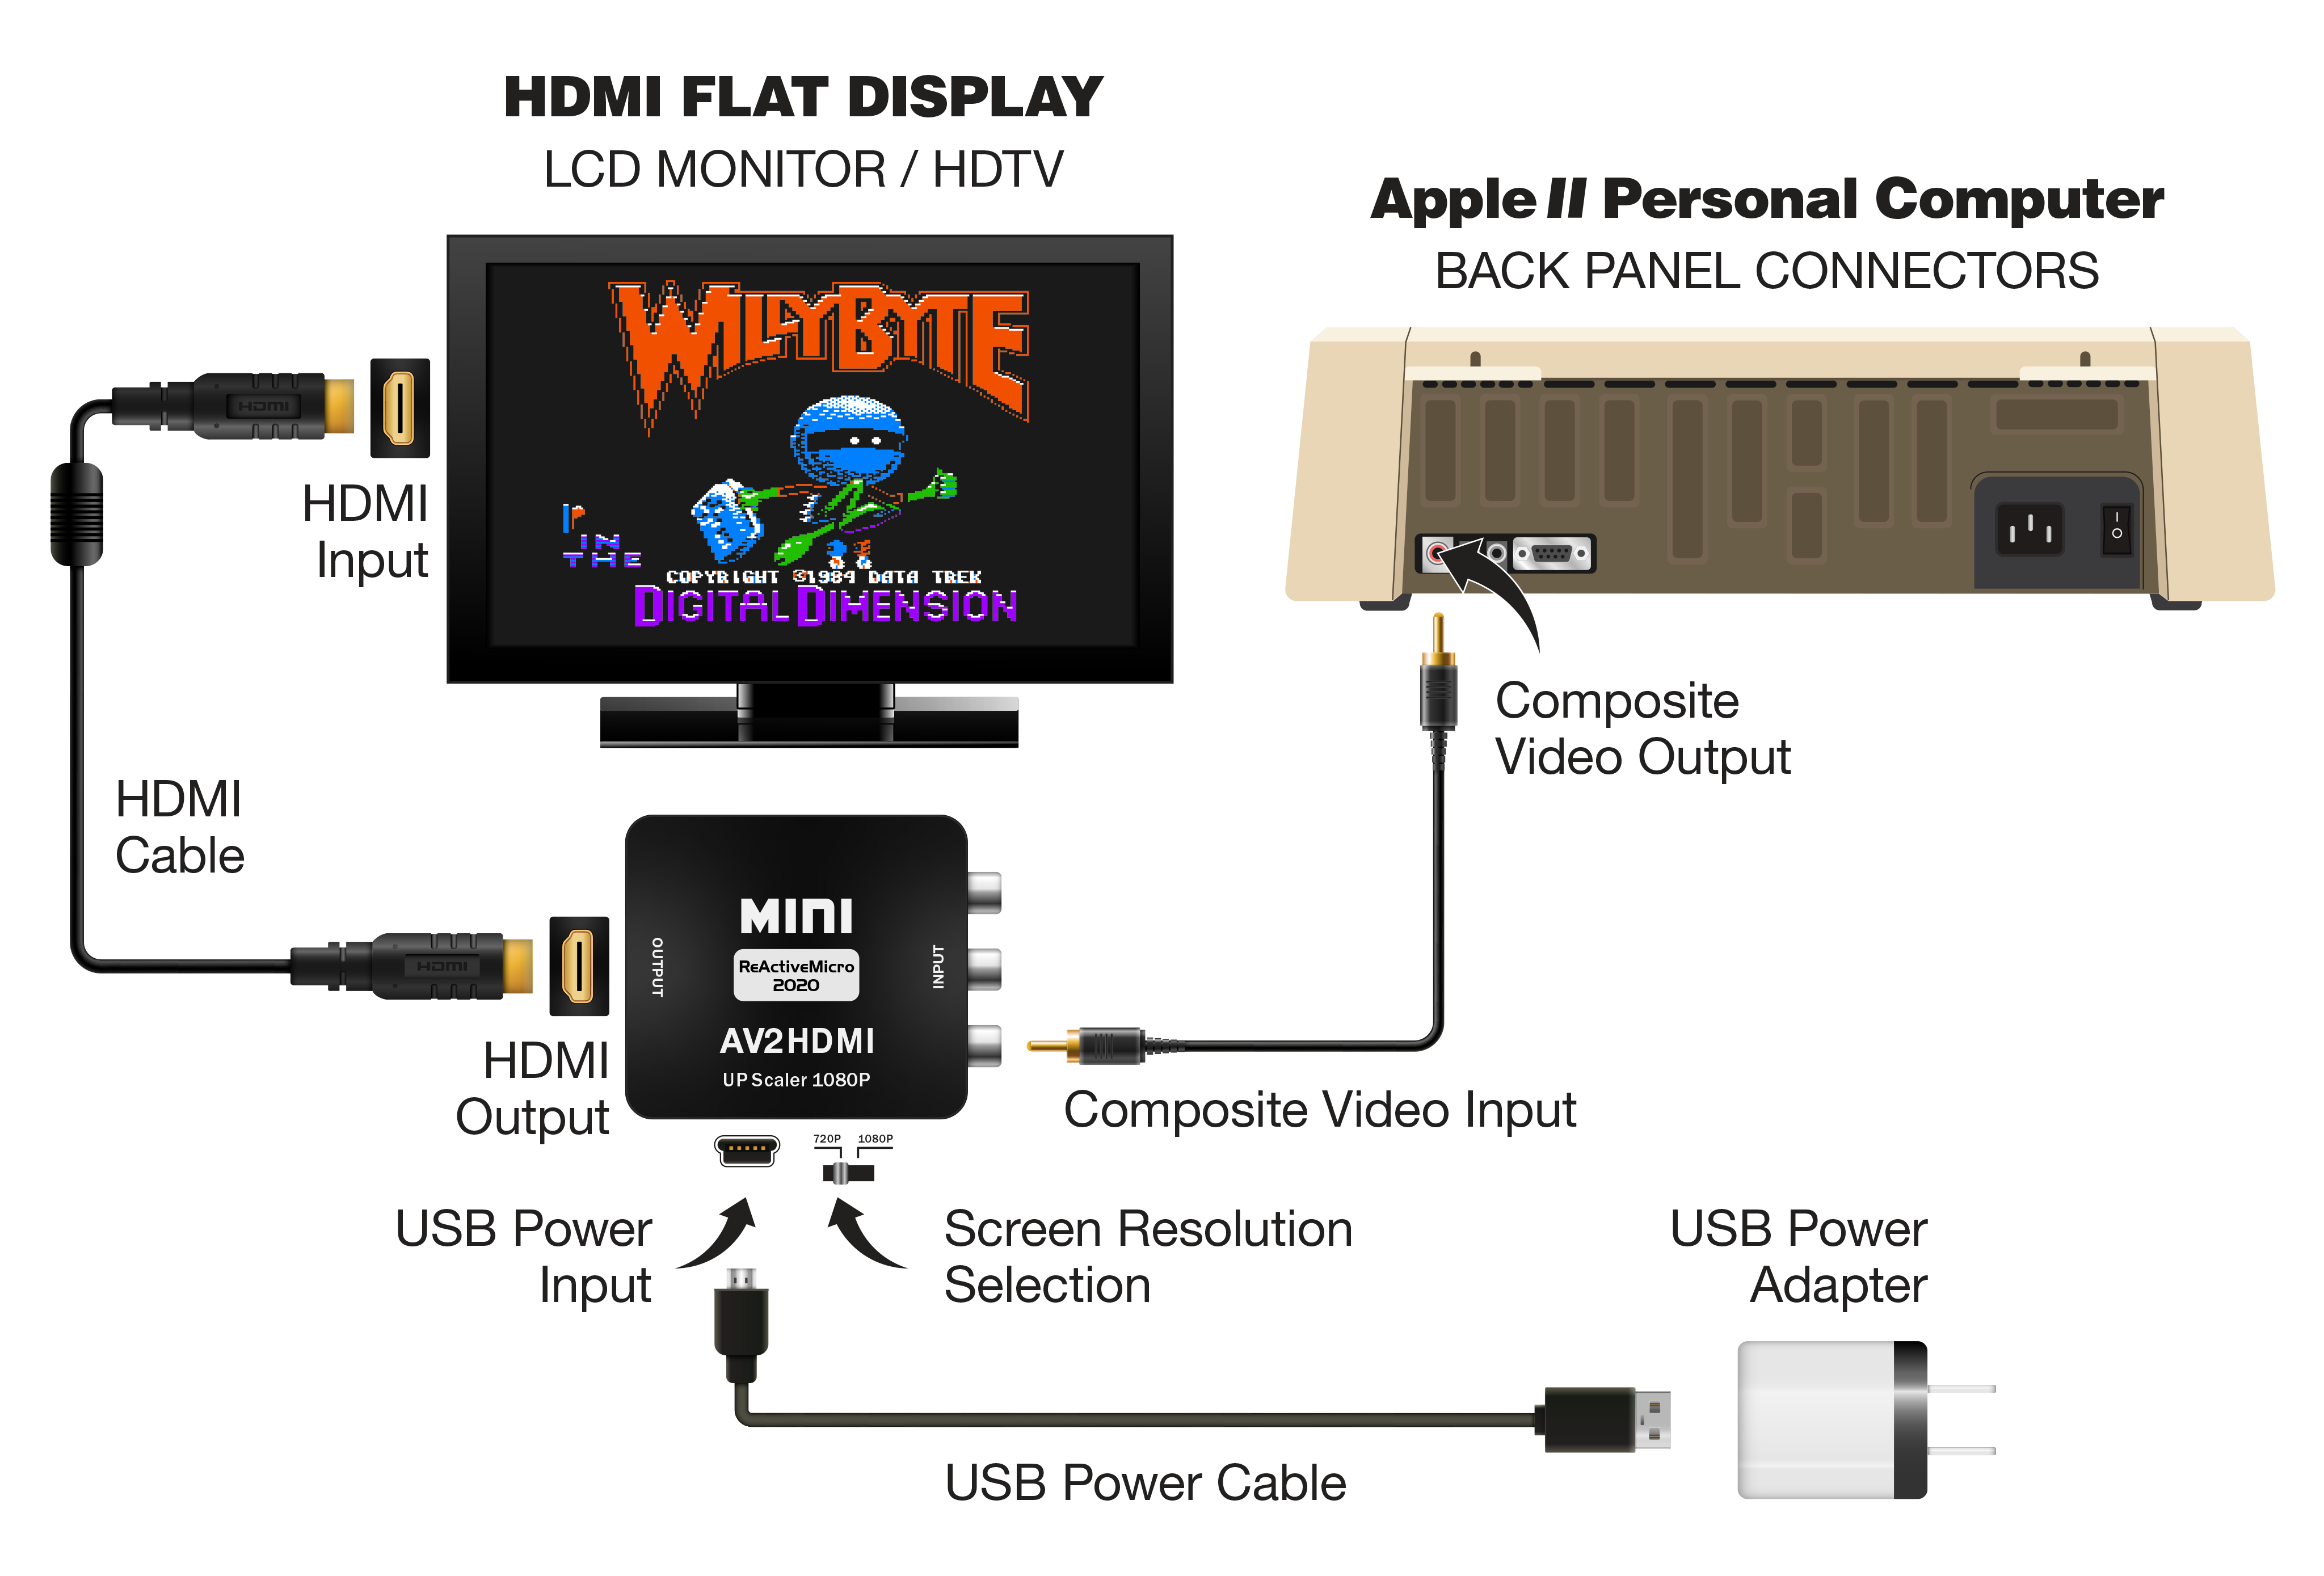 Cyberplads ironi Mindre end Mini AV2HDMI Video Adapter - The ReActiveMicro Apple II Wiki